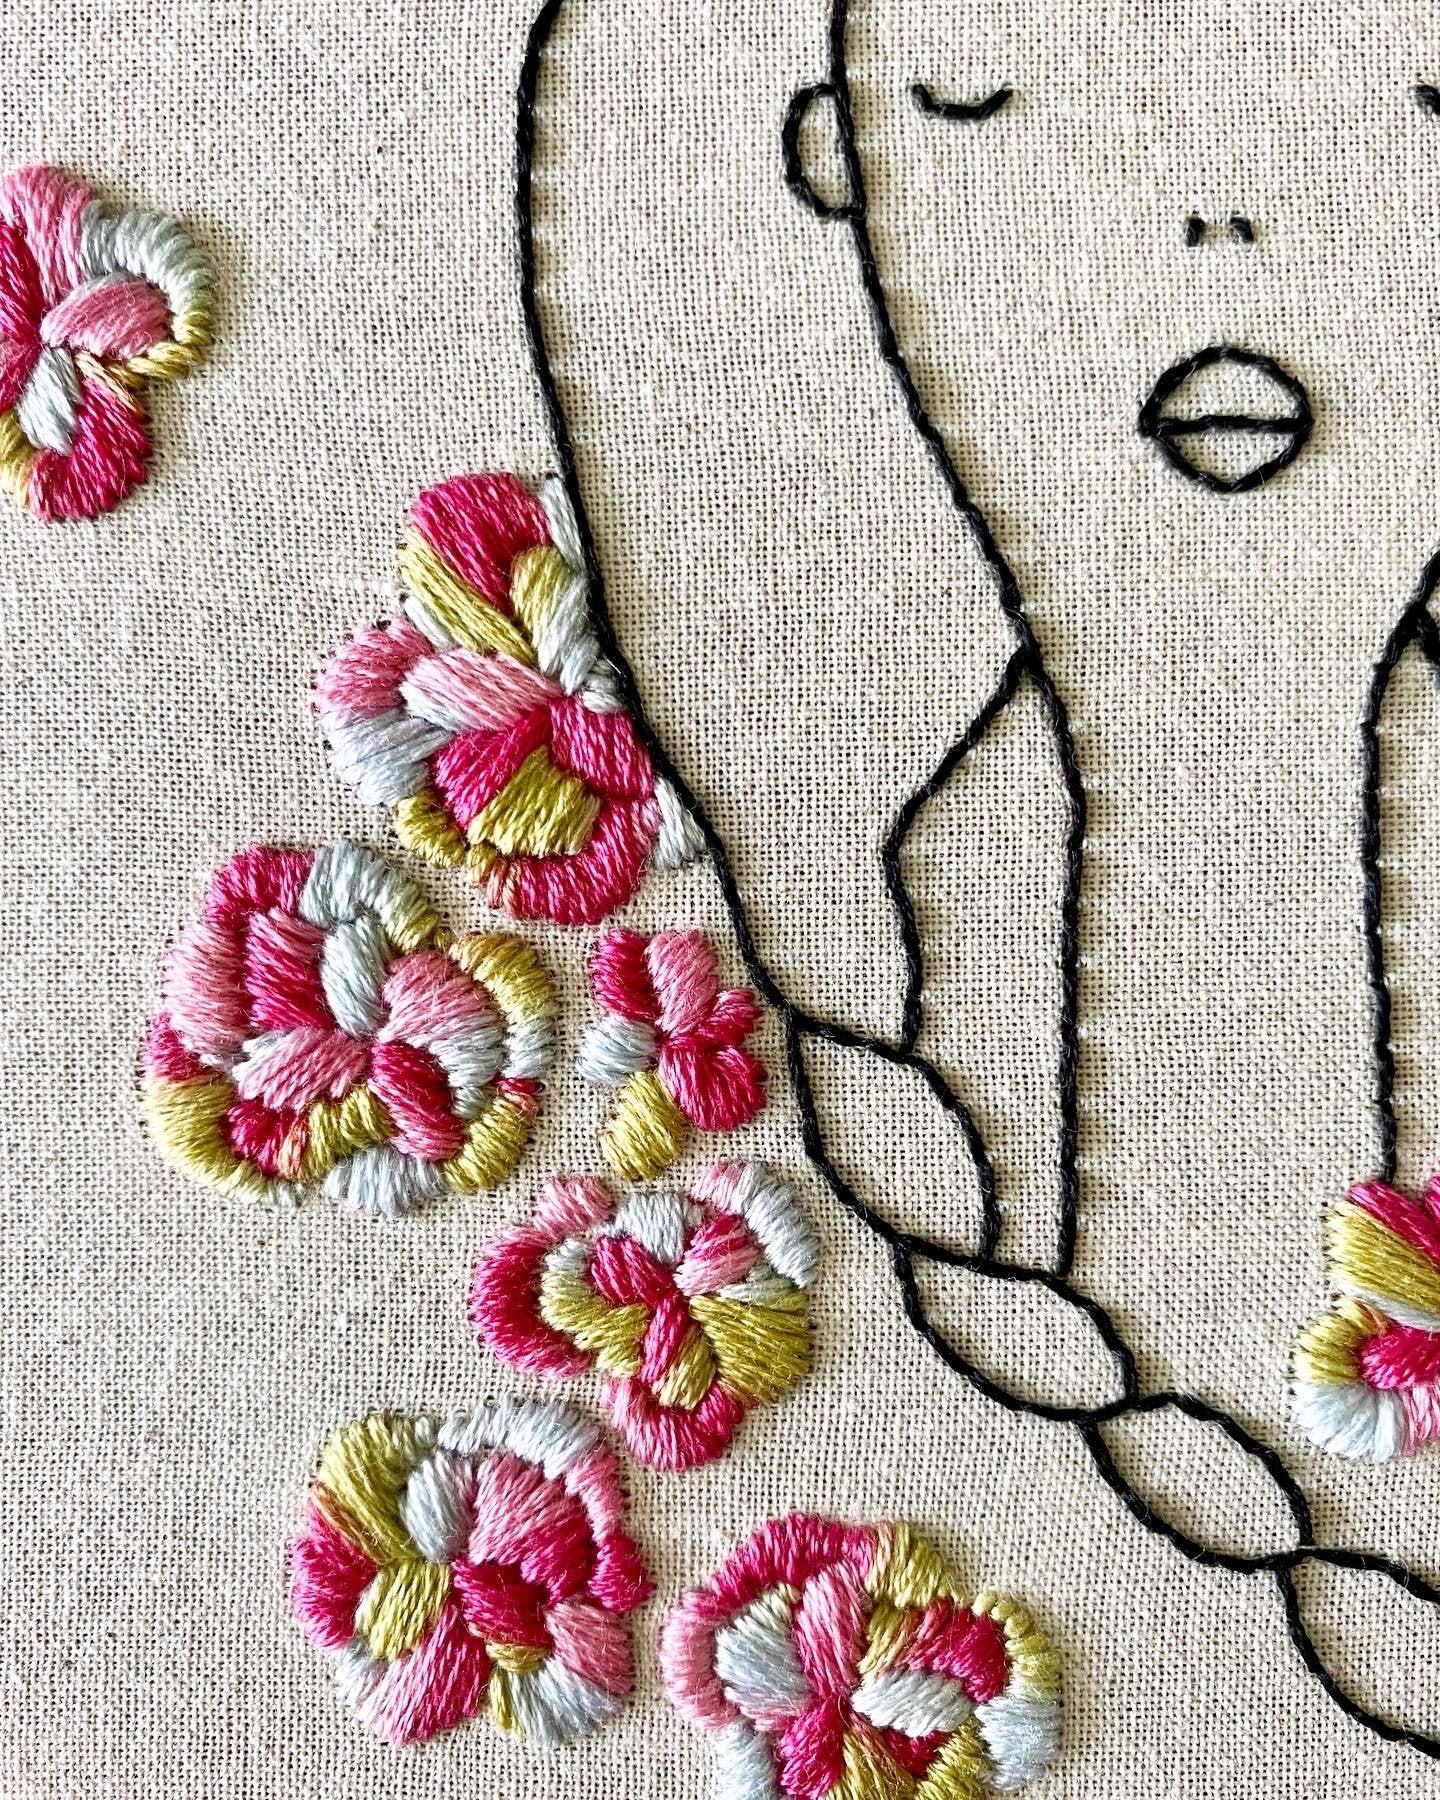 chris davis illustration embroidery I